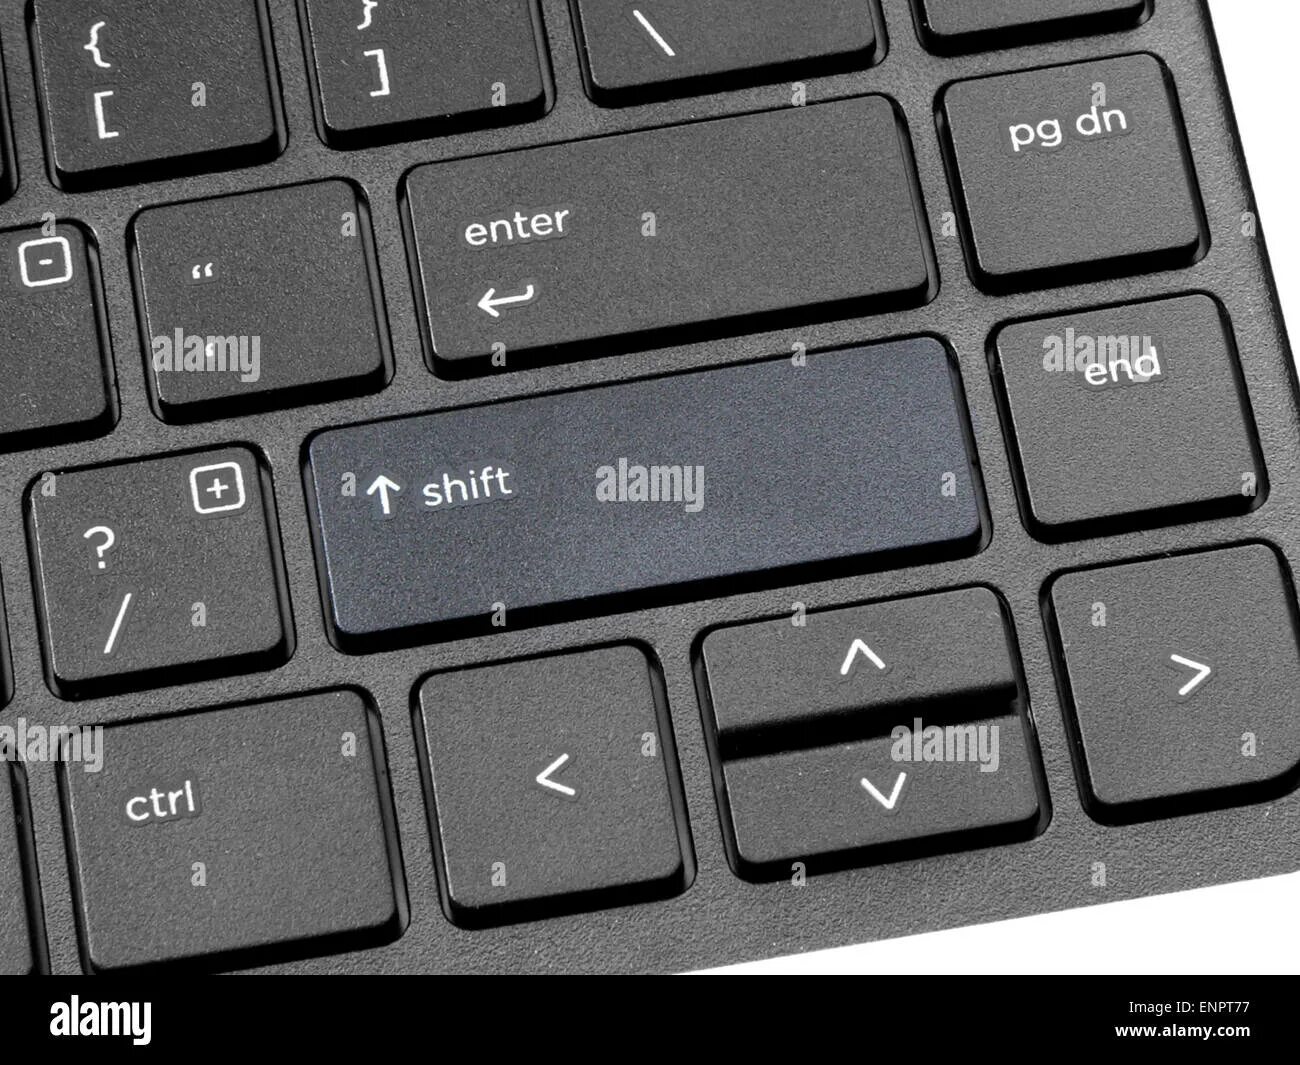 Как сделать enter. Кнопка шифт на клавиатуре. Shift на клавиатуре компьютера. Клавиша шифт на компьютере. Клавиша шифт на клавиатуре.